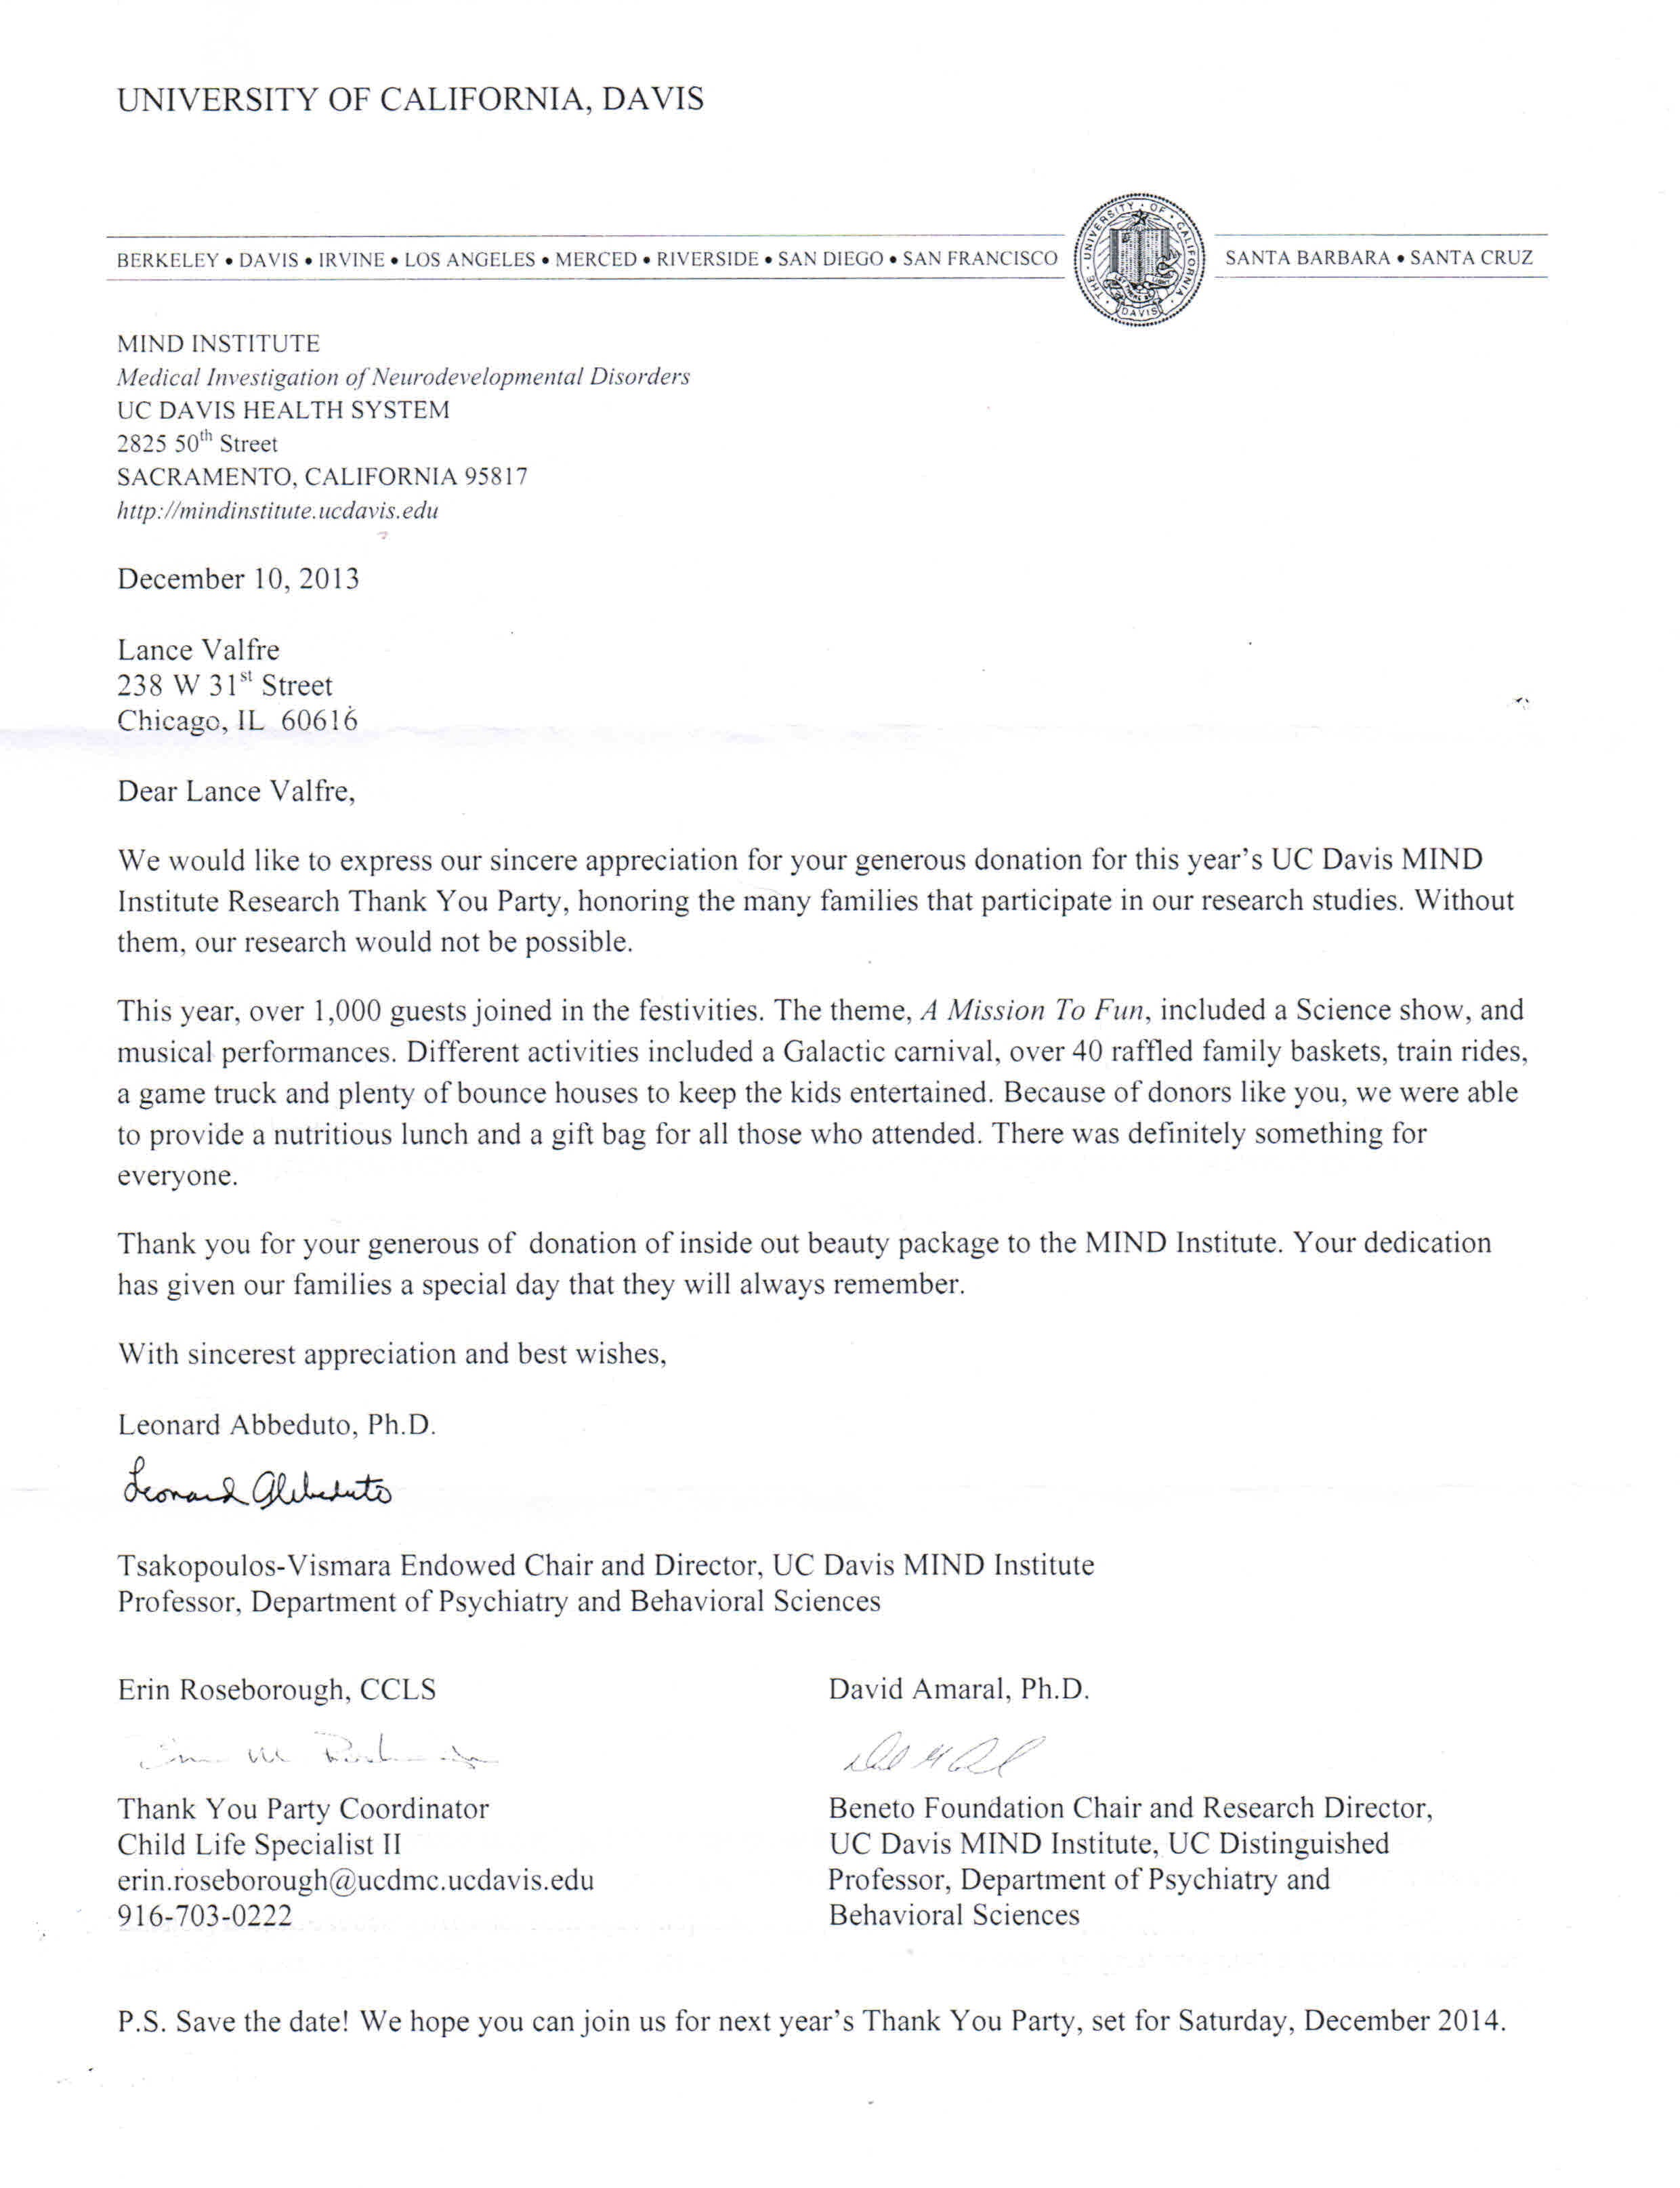 UC Davis Thank You Letter